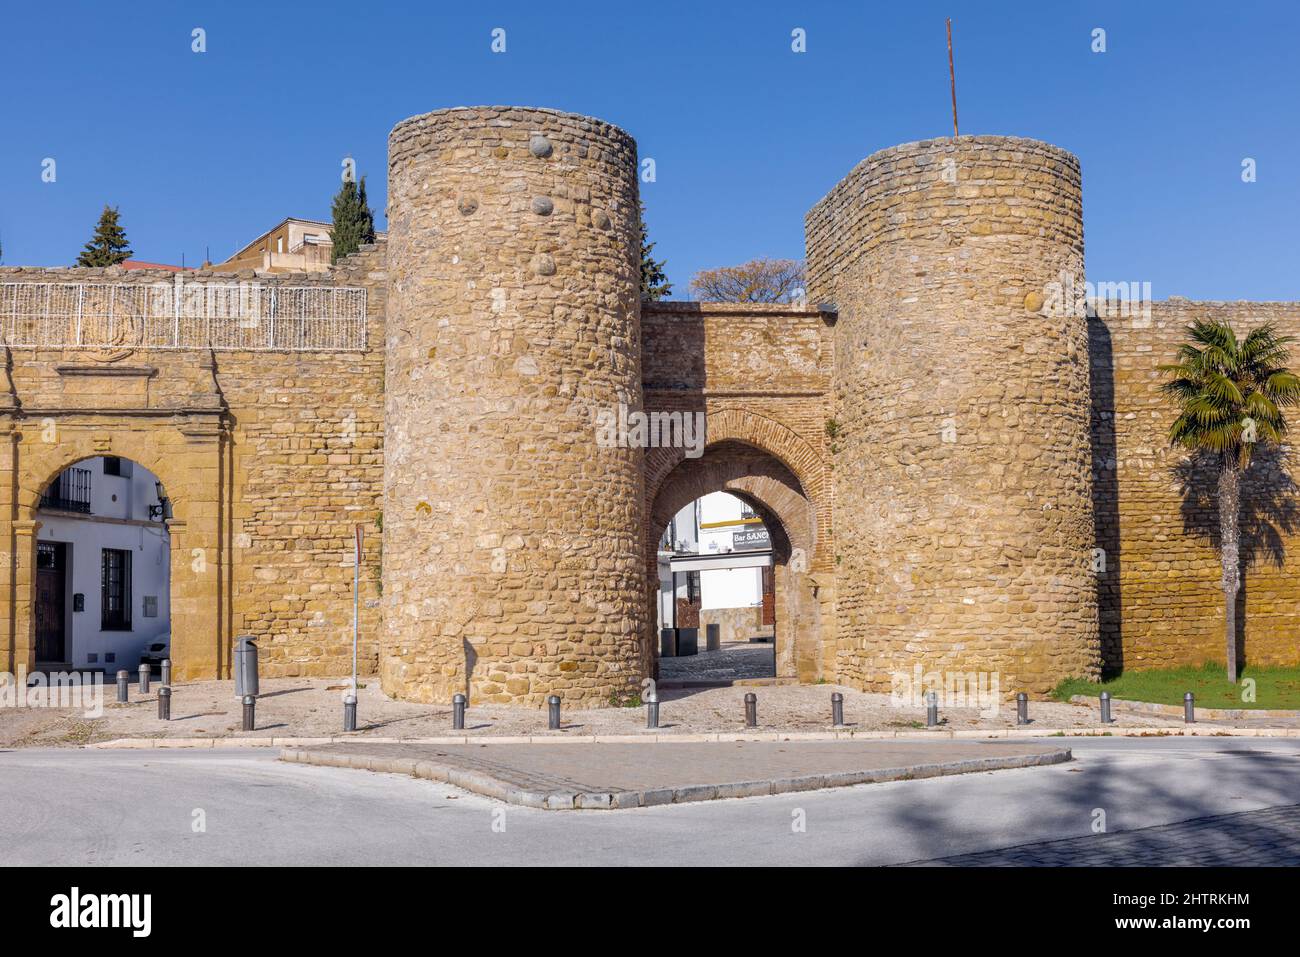 The 13th century Puerto de Almocabar, or Almocabar Gate and city walls, Ronda, Malaga Province, Andalusia, southern Spain. Puerto de Almocabar comes f Stock Photo